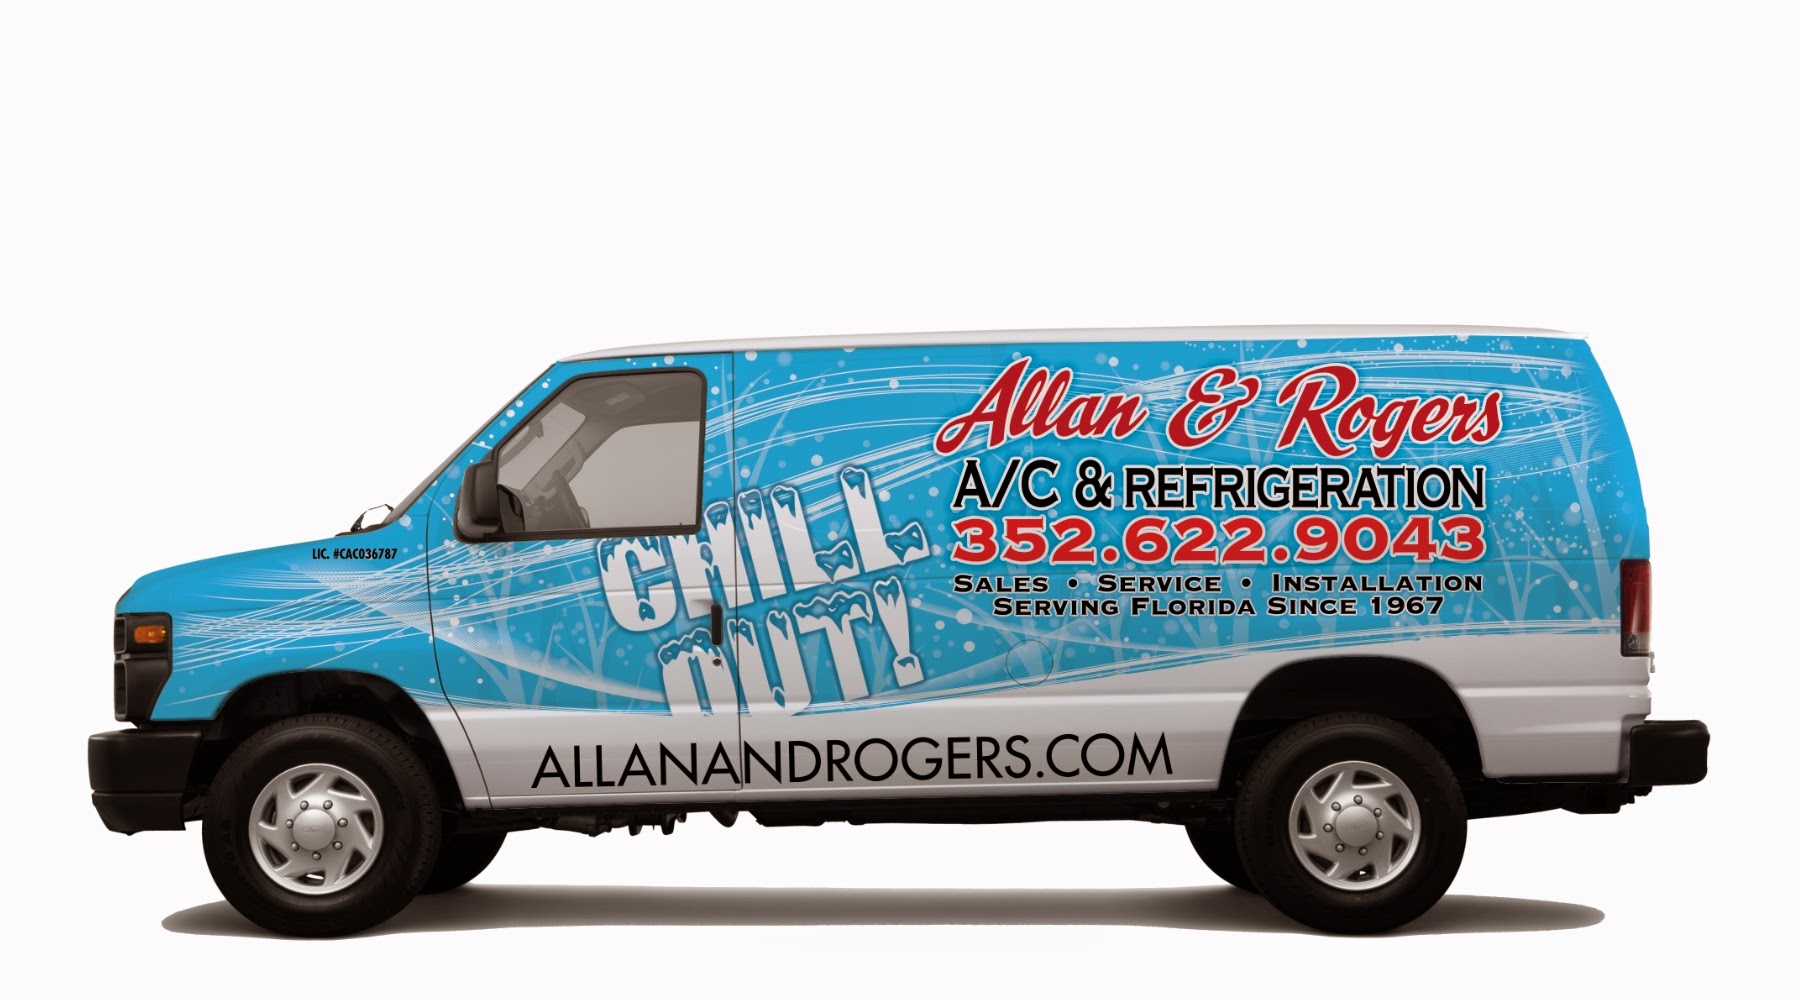 Allan & Rogers A/C & Refrigeration